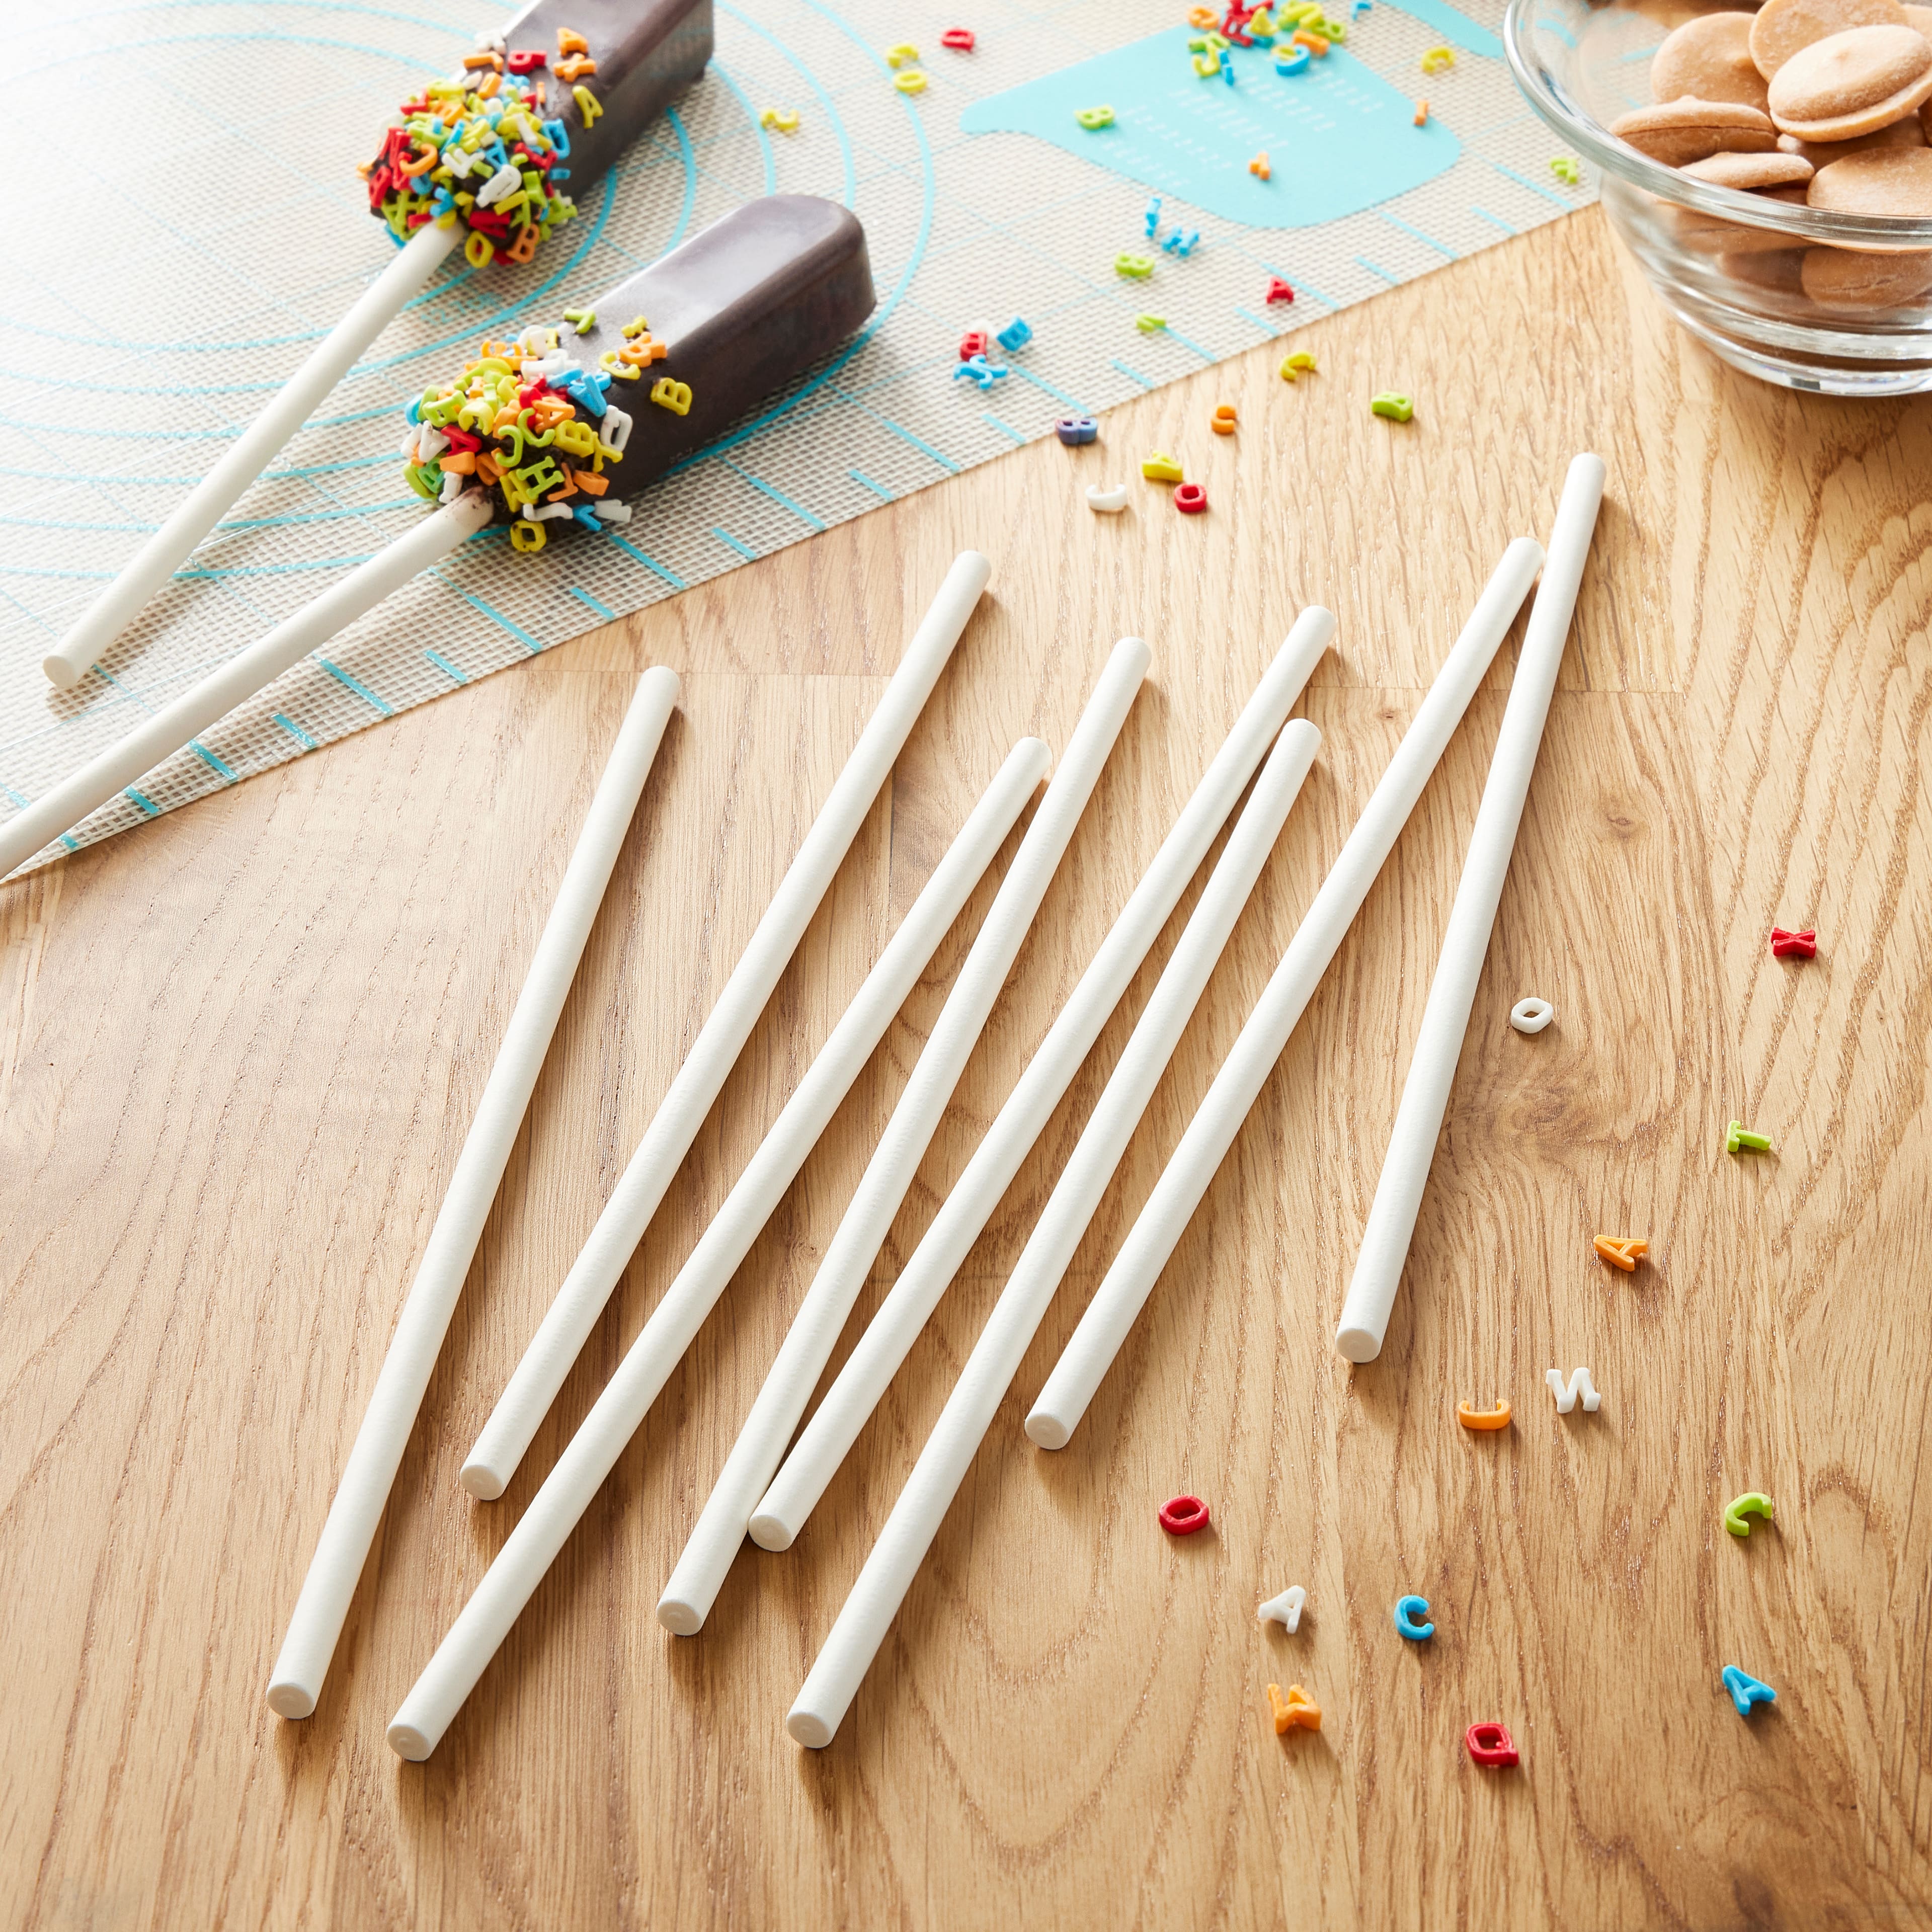 300 Pack Cake Pop Sticks 4 Inch Paper Treat Sticks for Lollipops